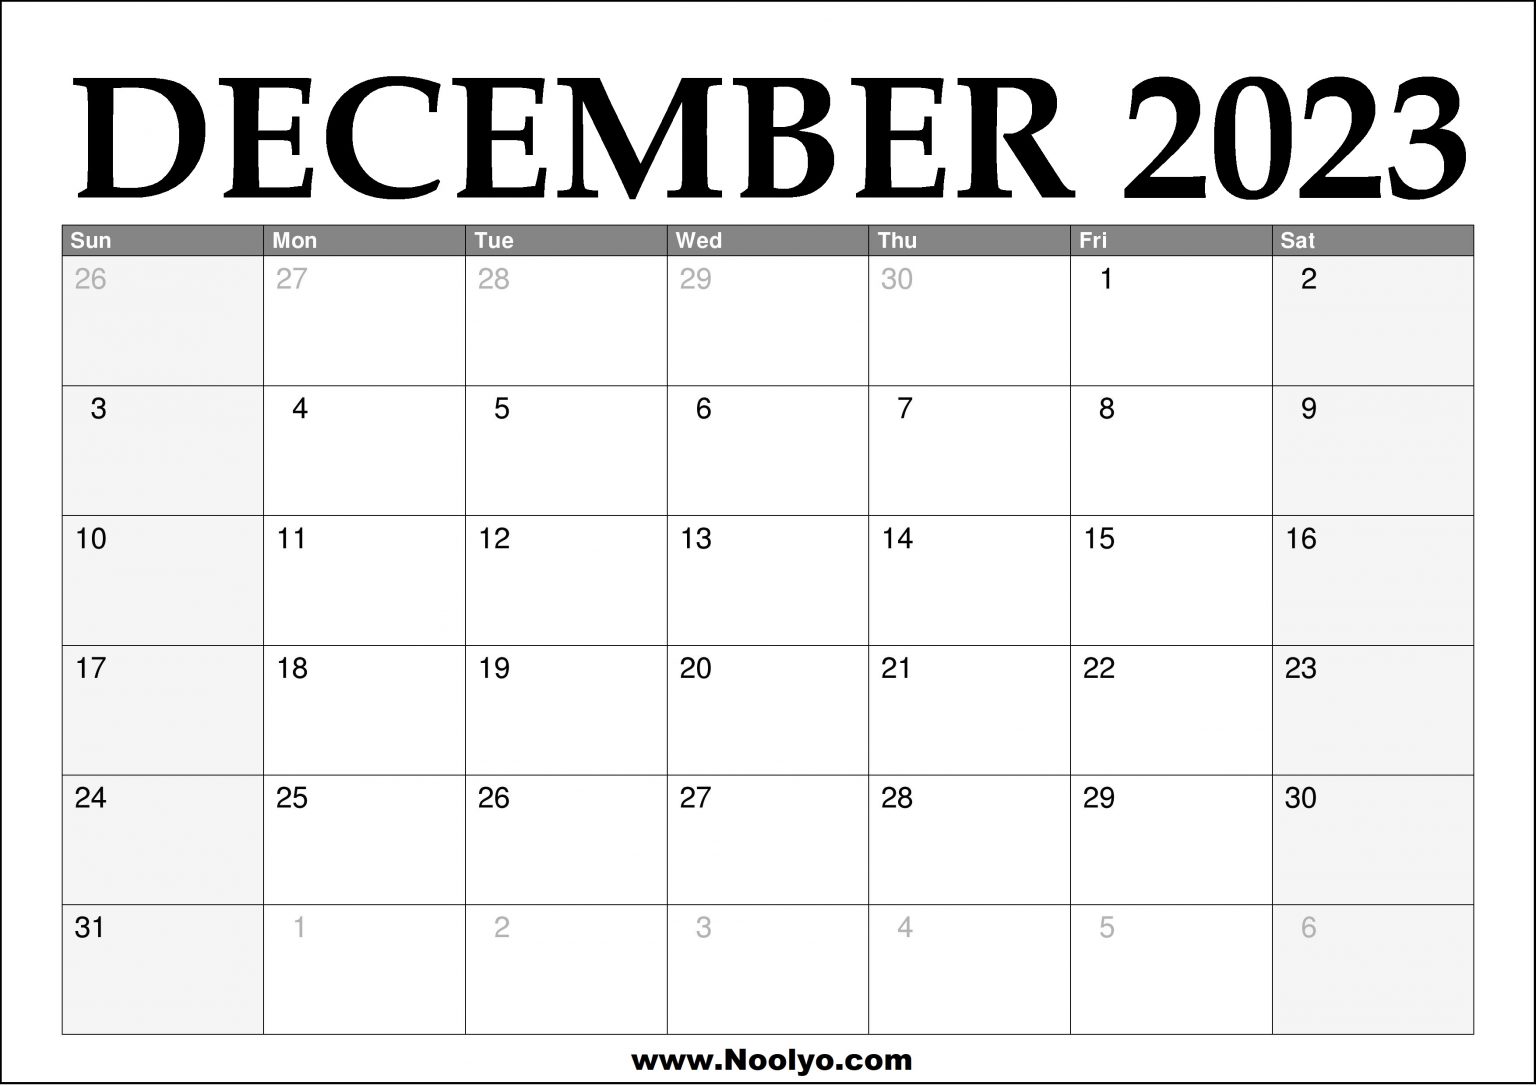 Calendars Calendars Printable